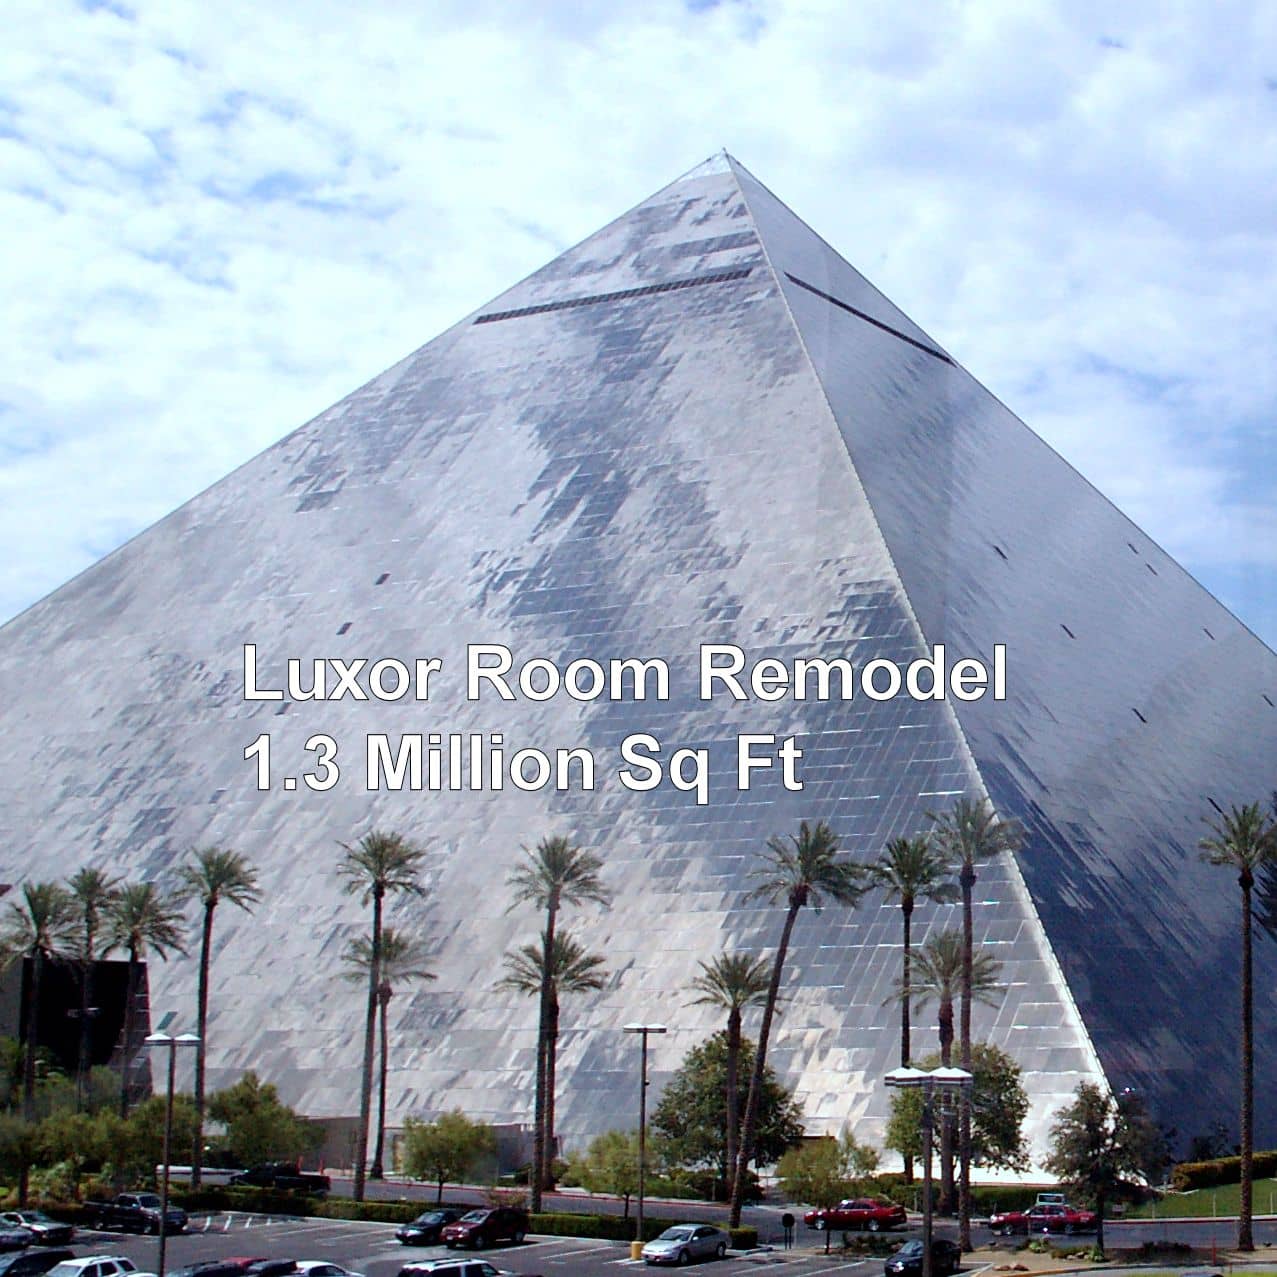 Luxor room remodel website